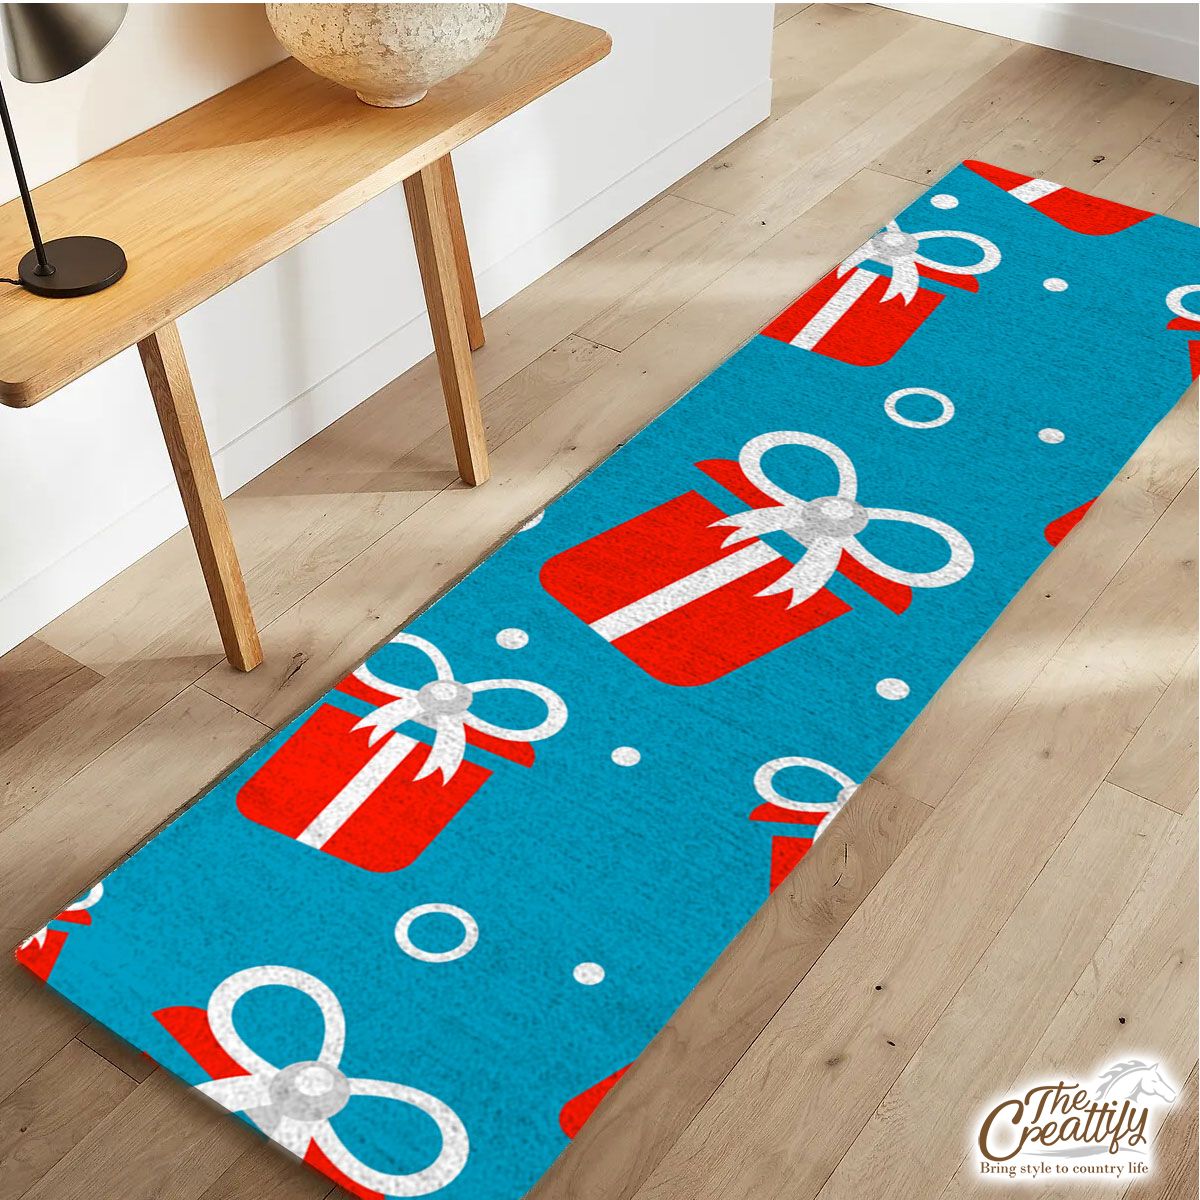 Red And White Christmas Gift On Blue Background Runner Carpet